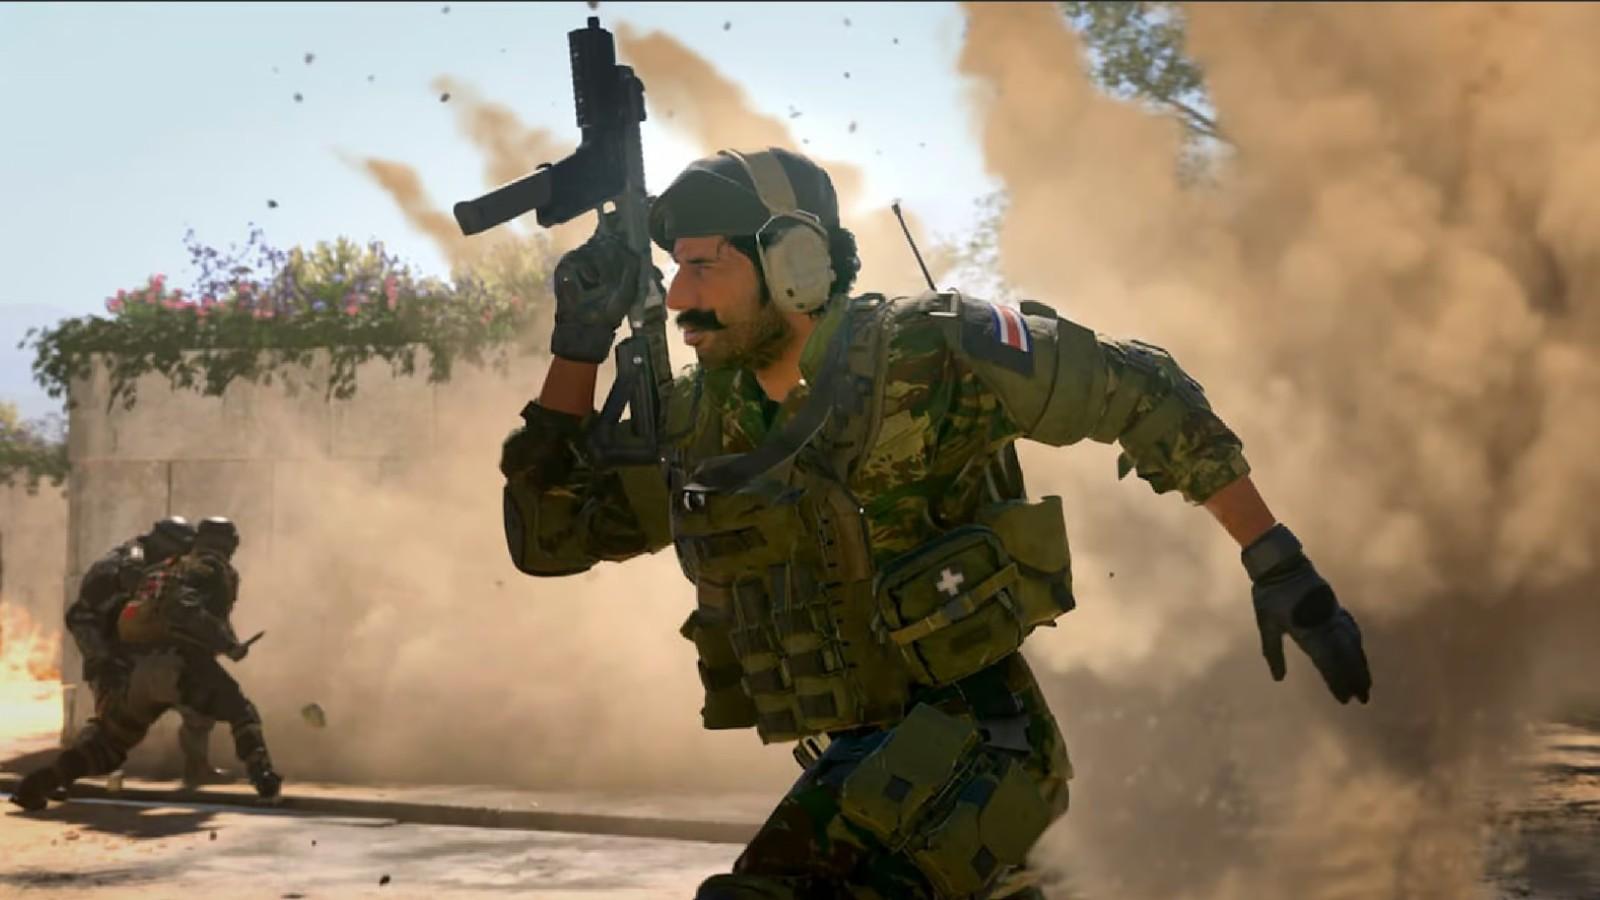 Modern Warfare 2 Review: All is Fair in Love and (Modern) War(fare